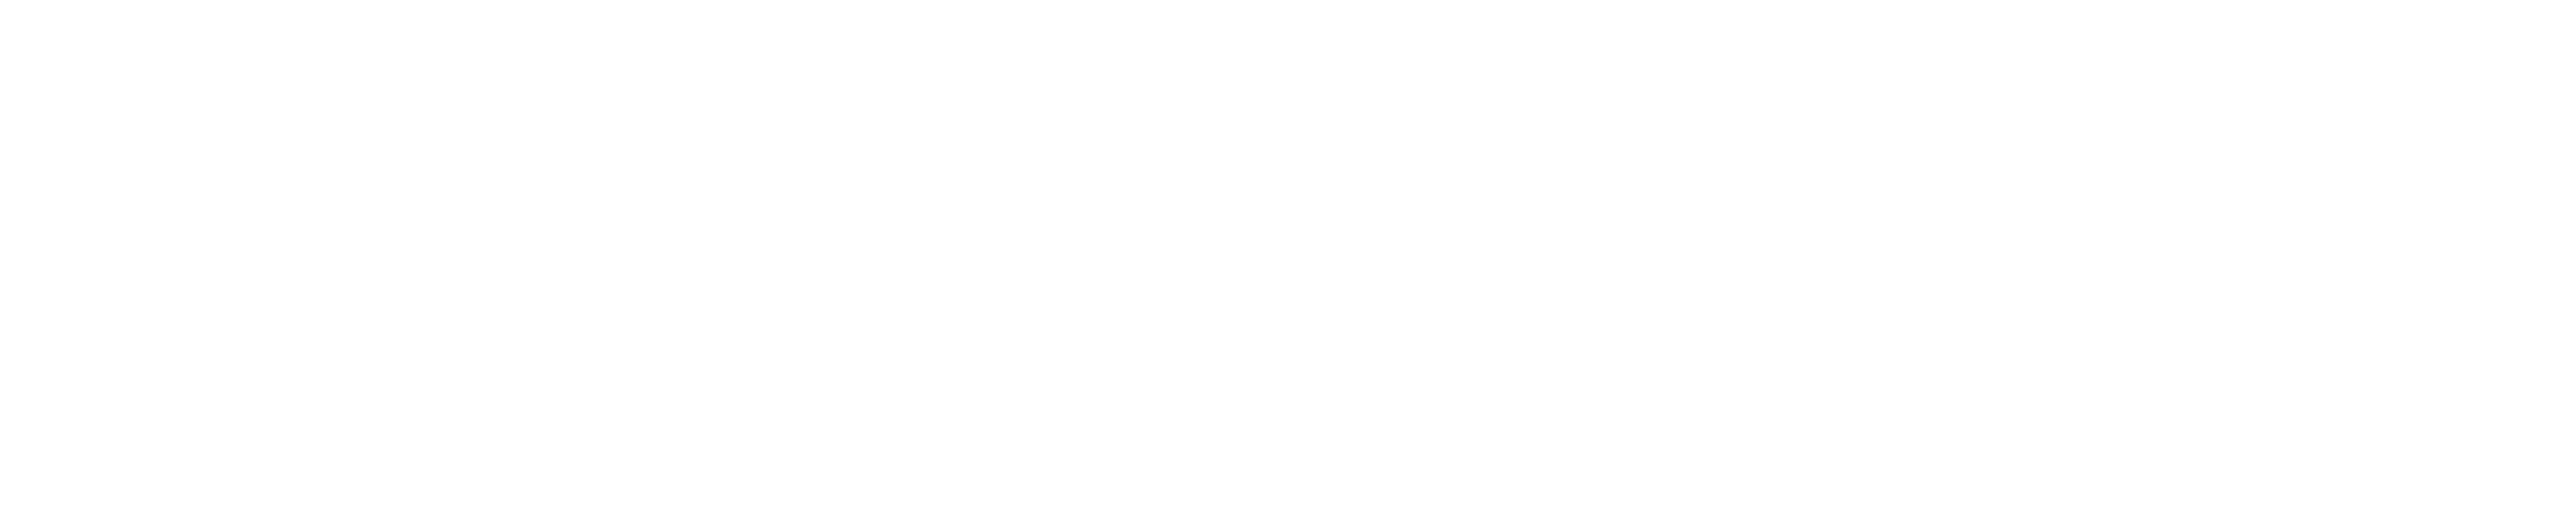 Lady Gucci: The Story Of Patrizia Reggiani logo